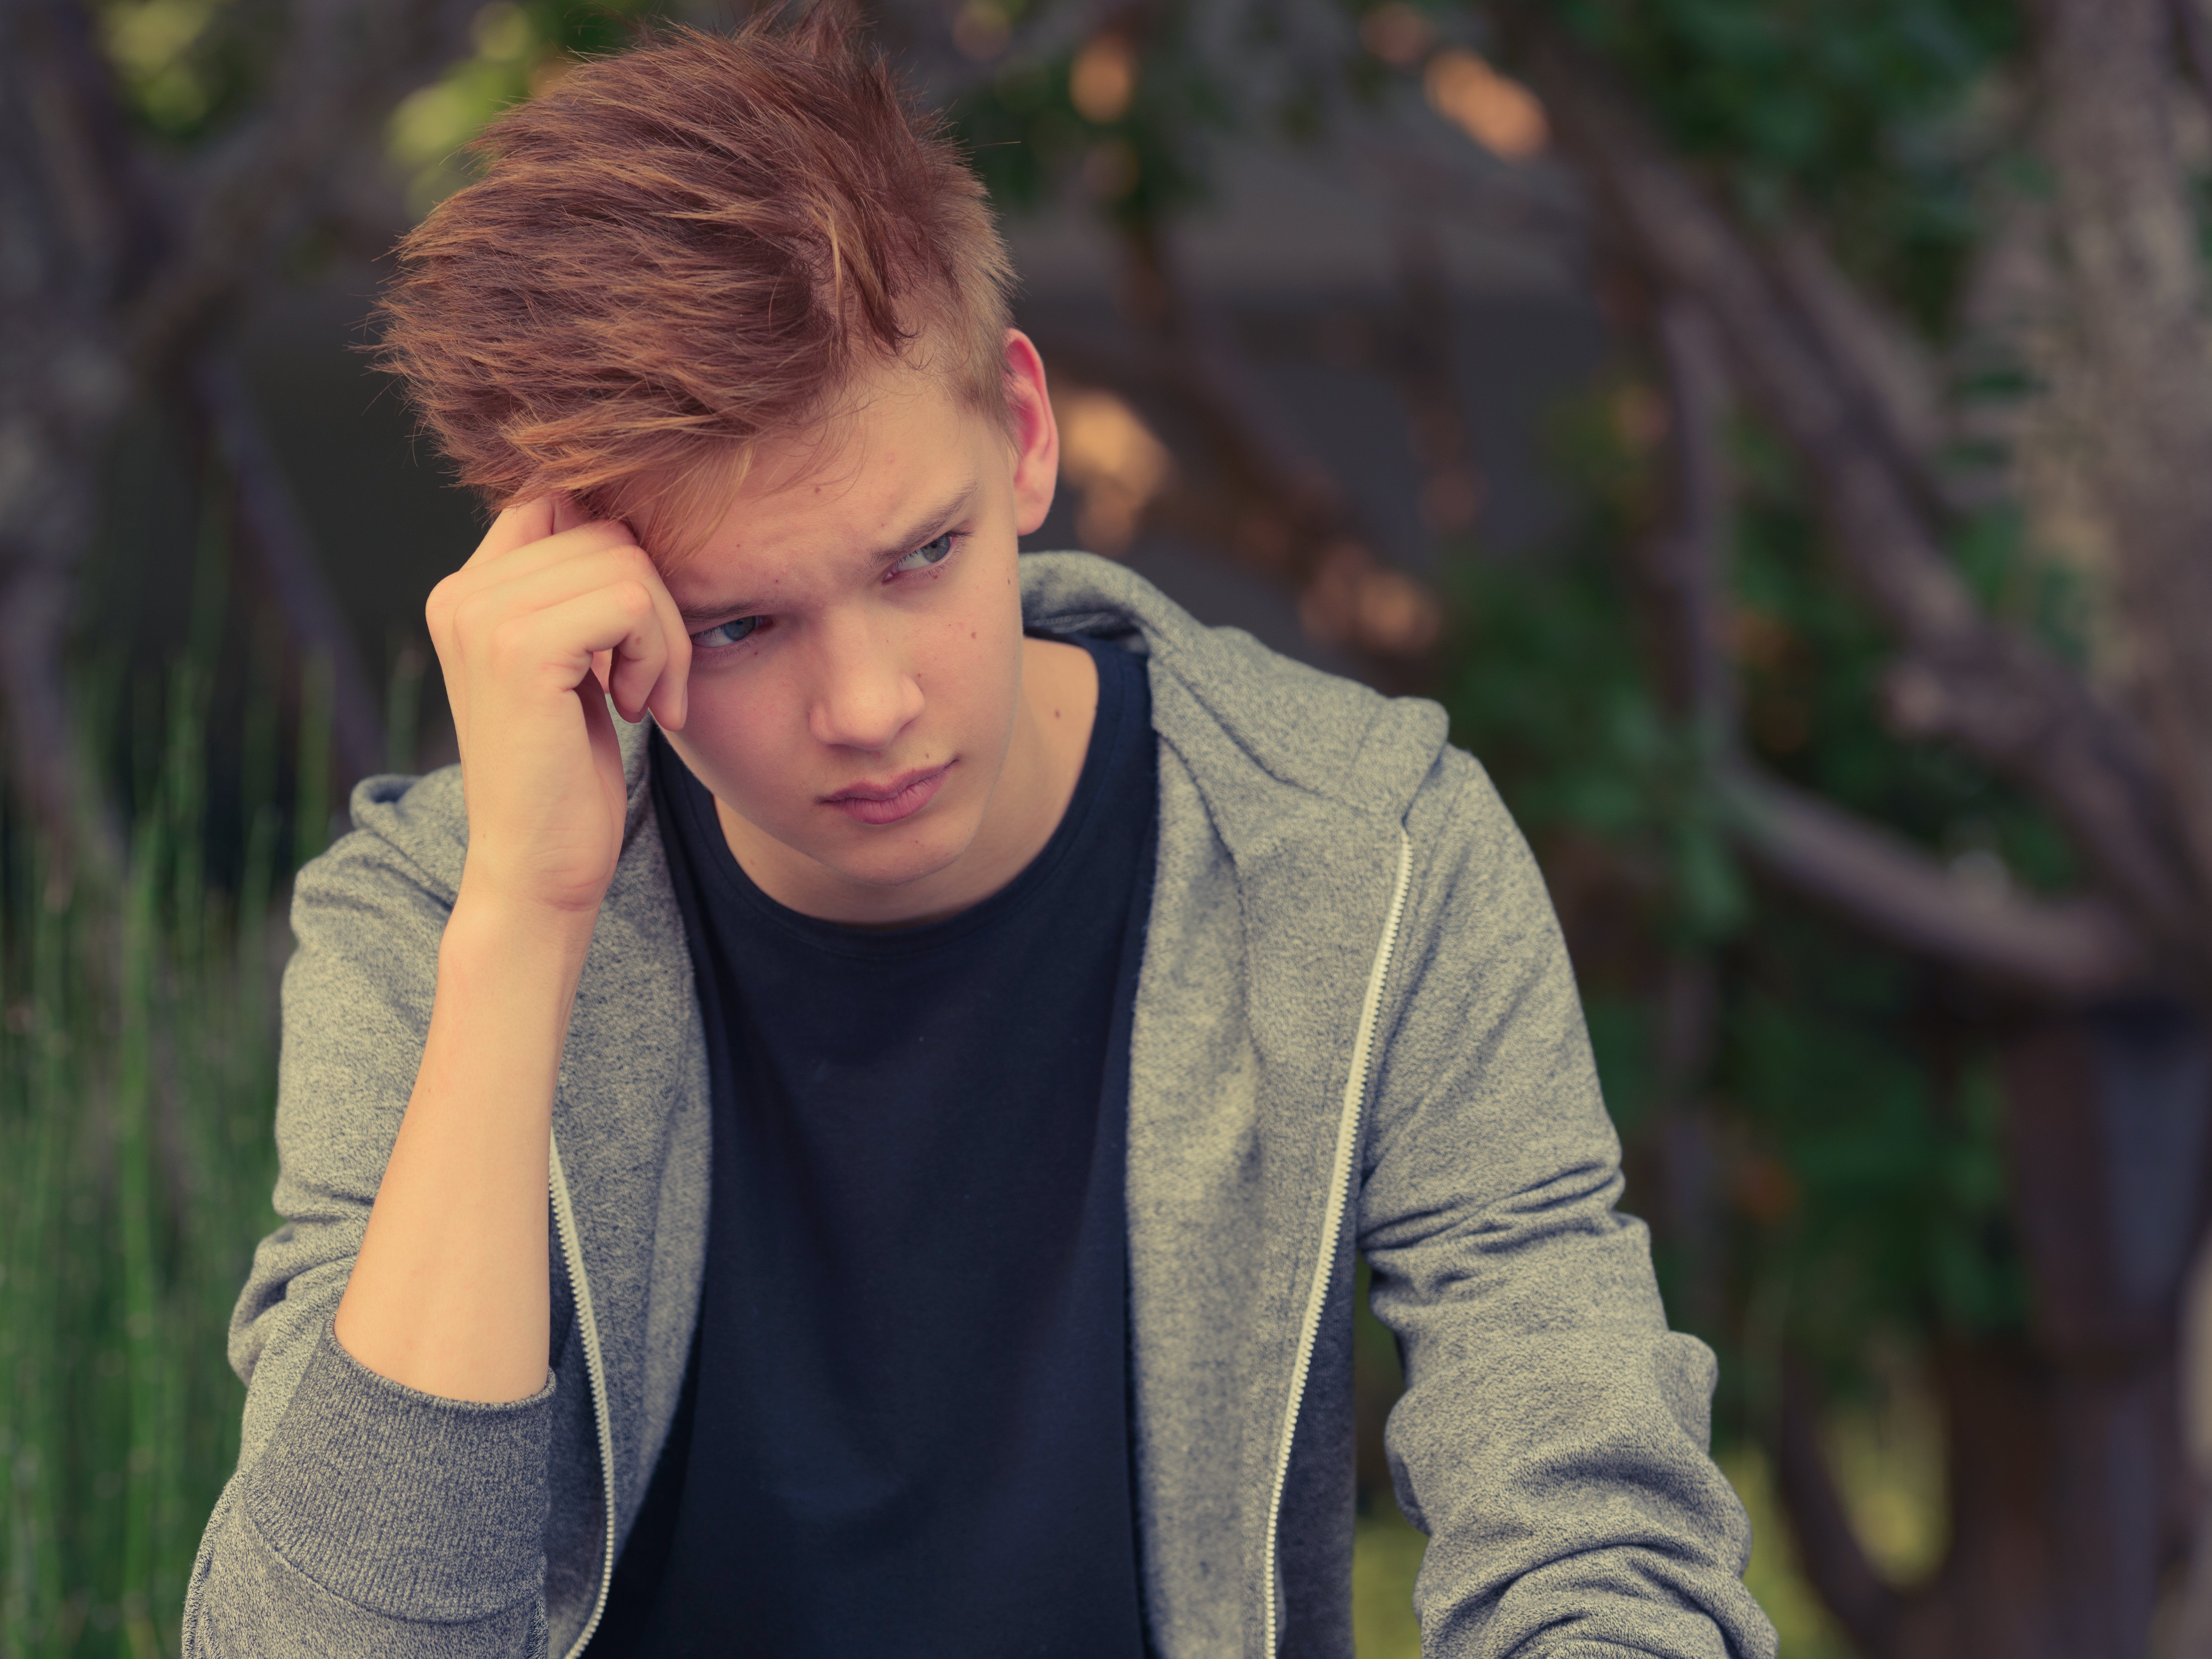 A concerned teenager | Source: Shutterstock